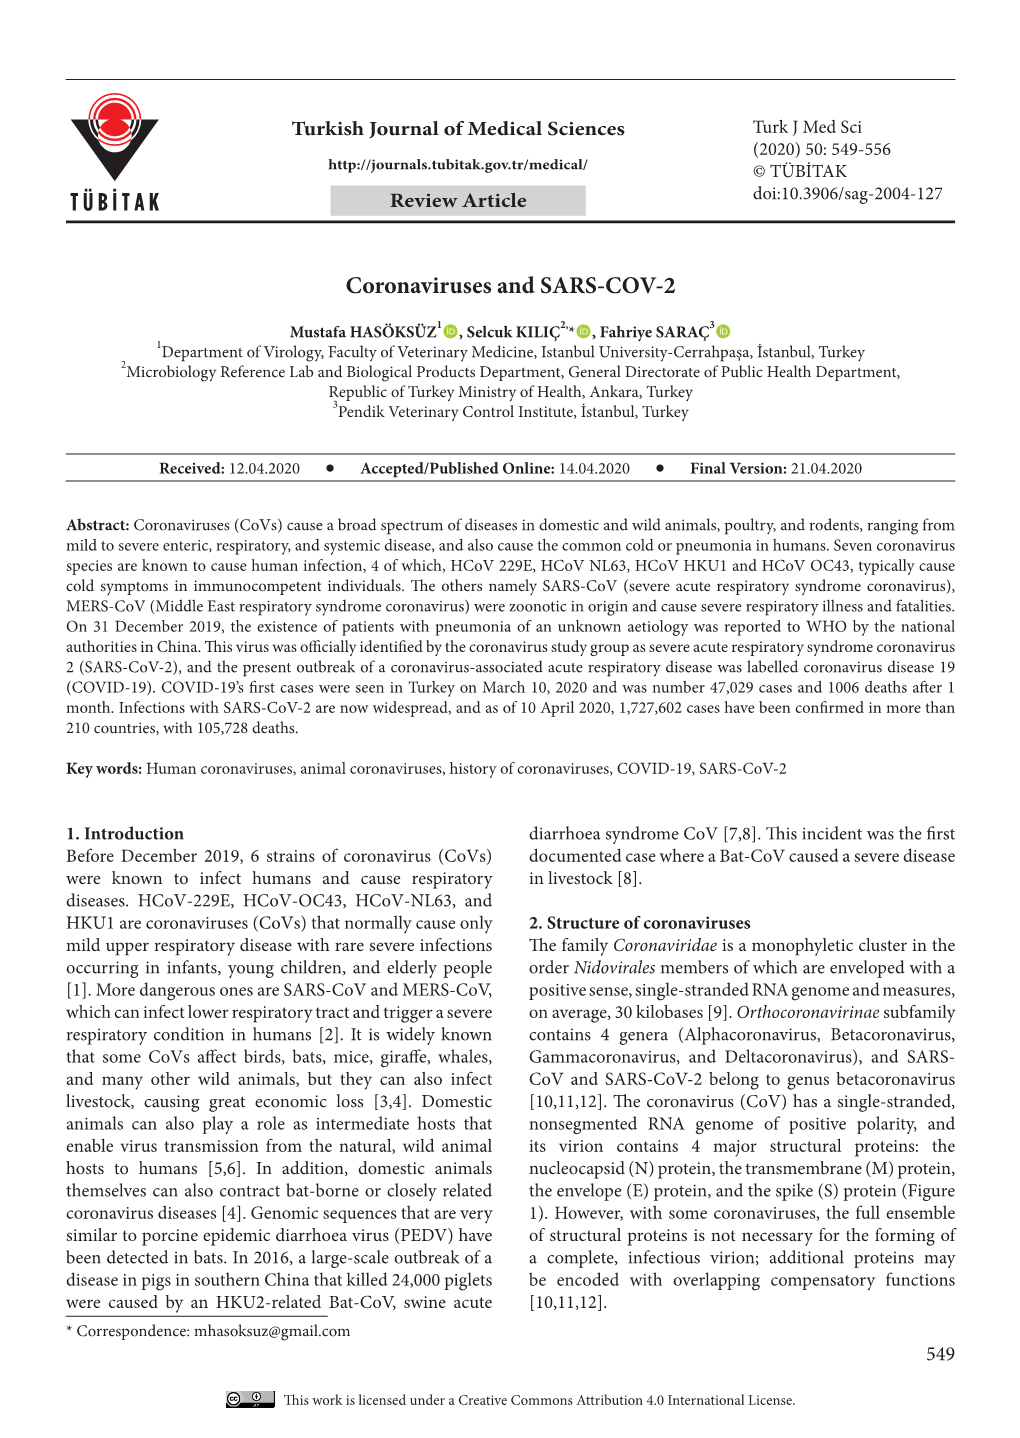 Coronaviruses and SARS-COV-2